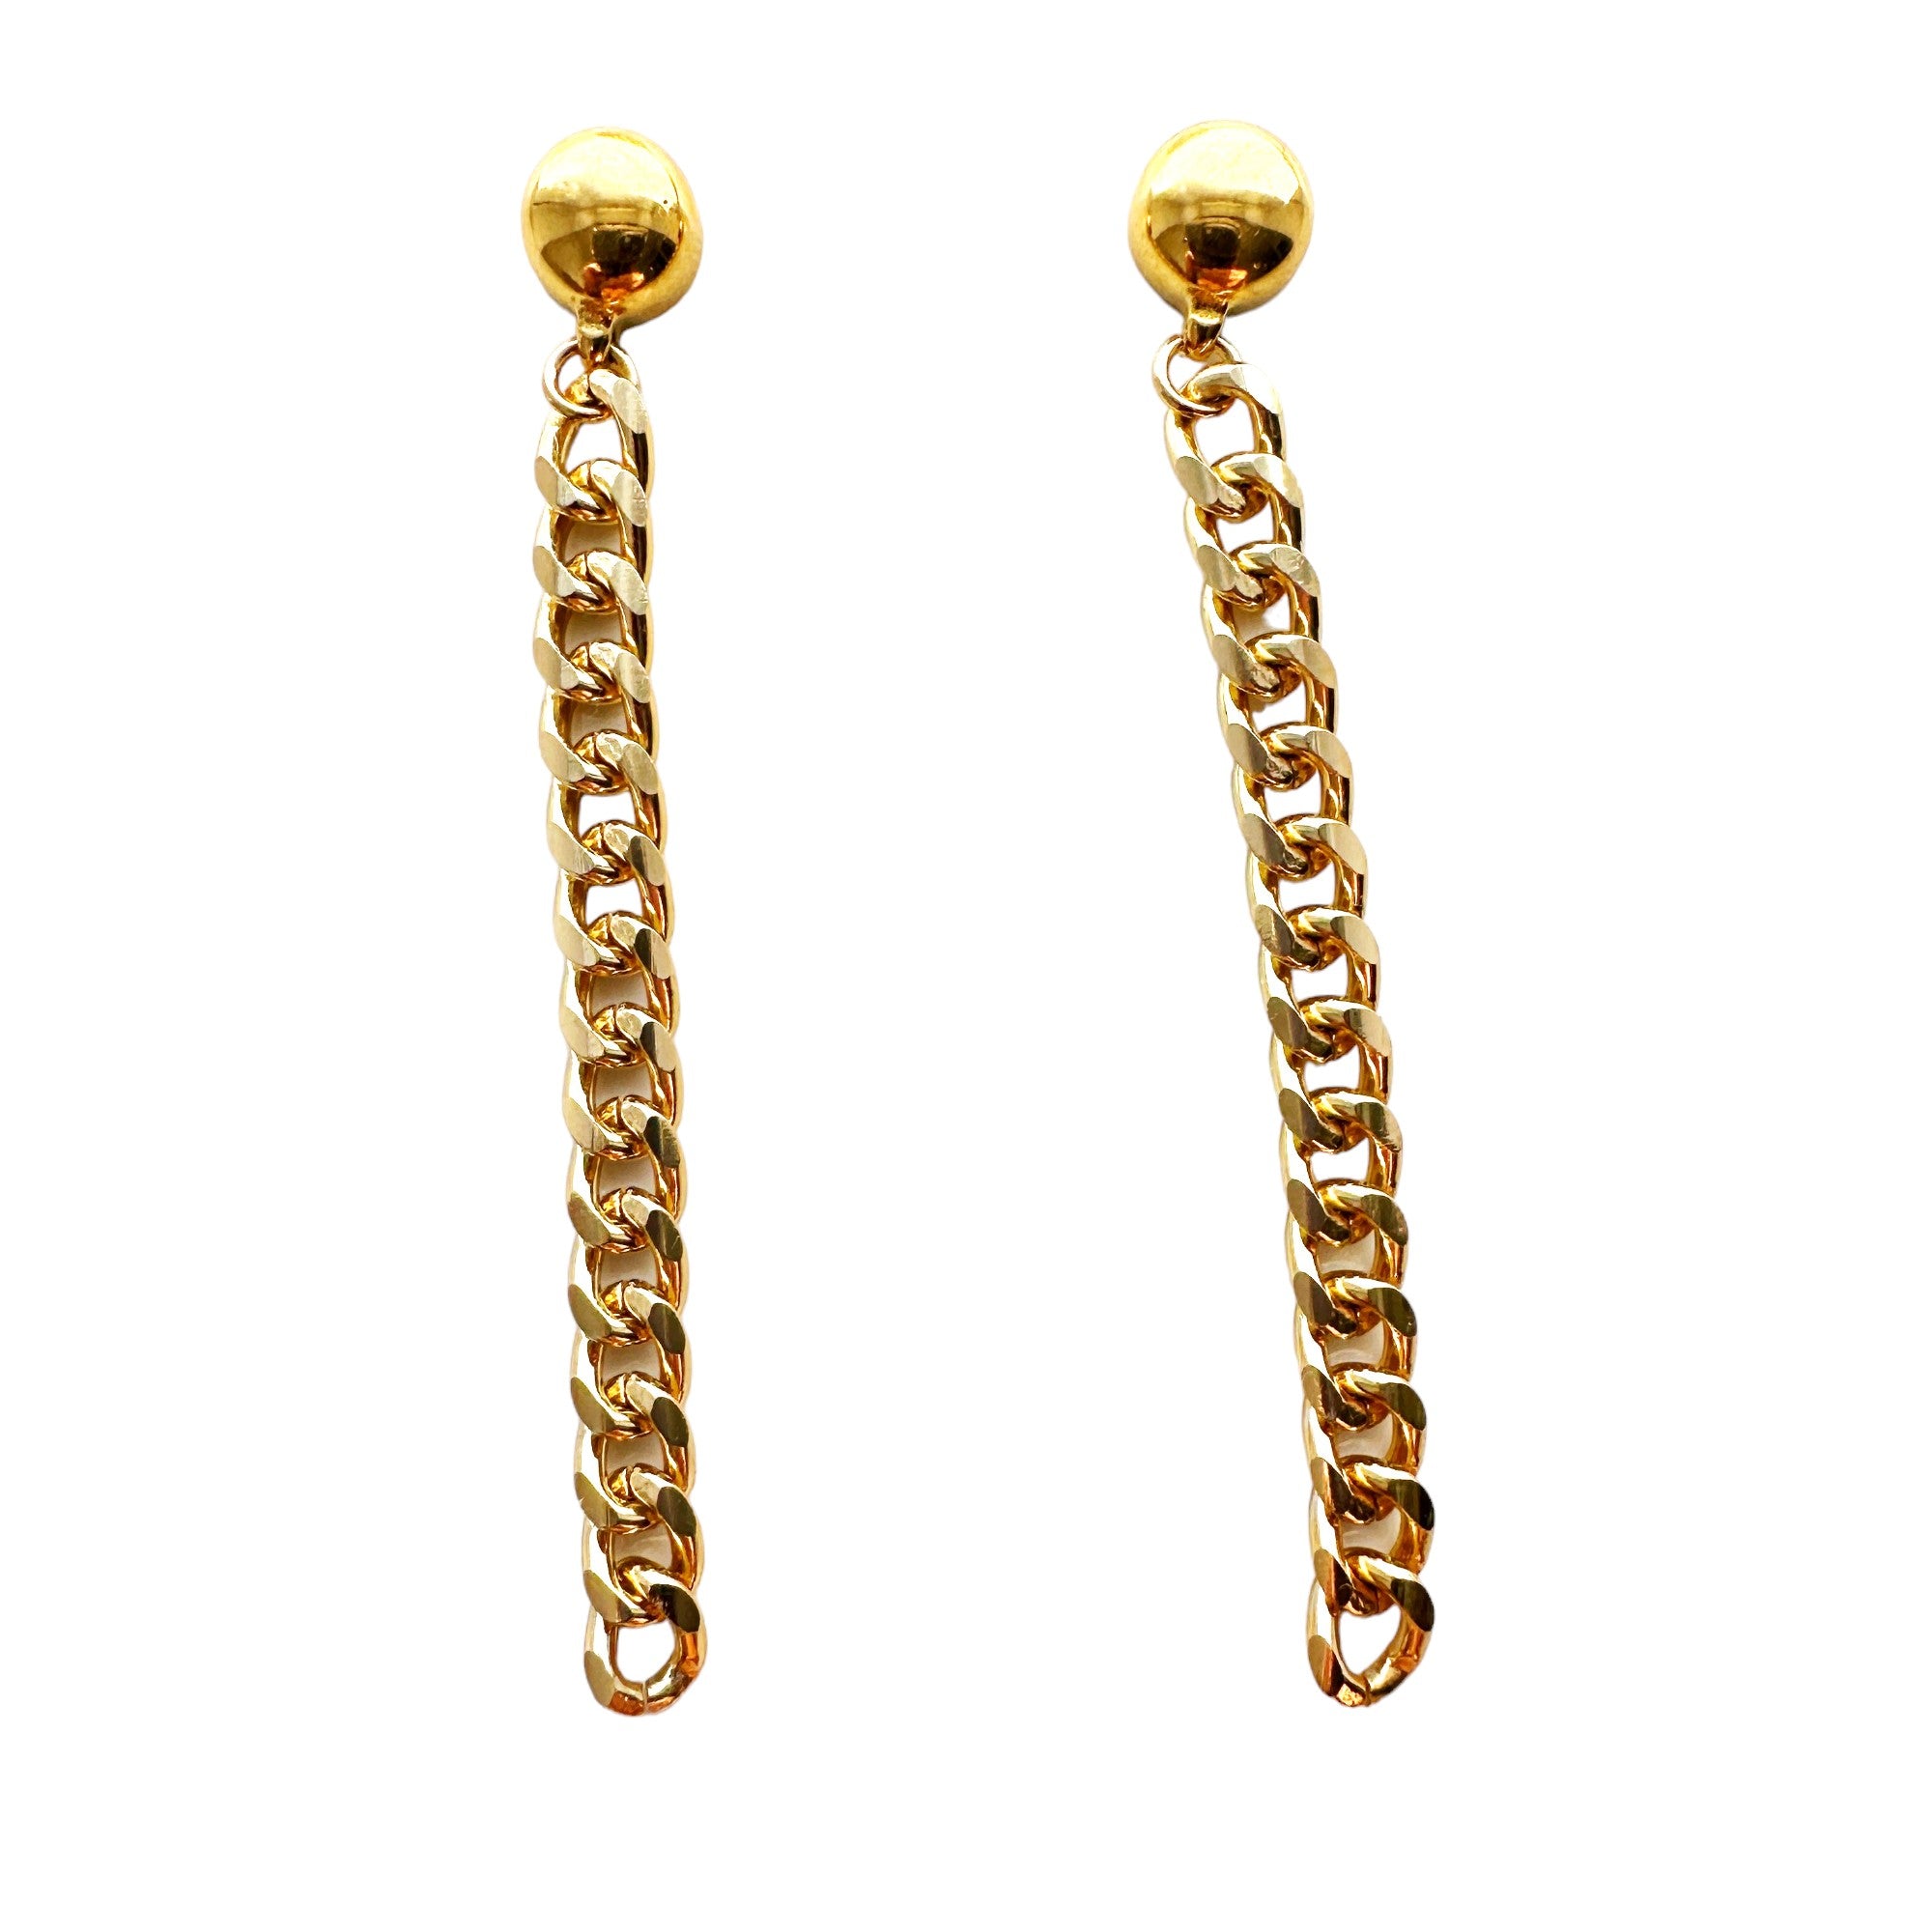 TI-GO Small gold chain earrings